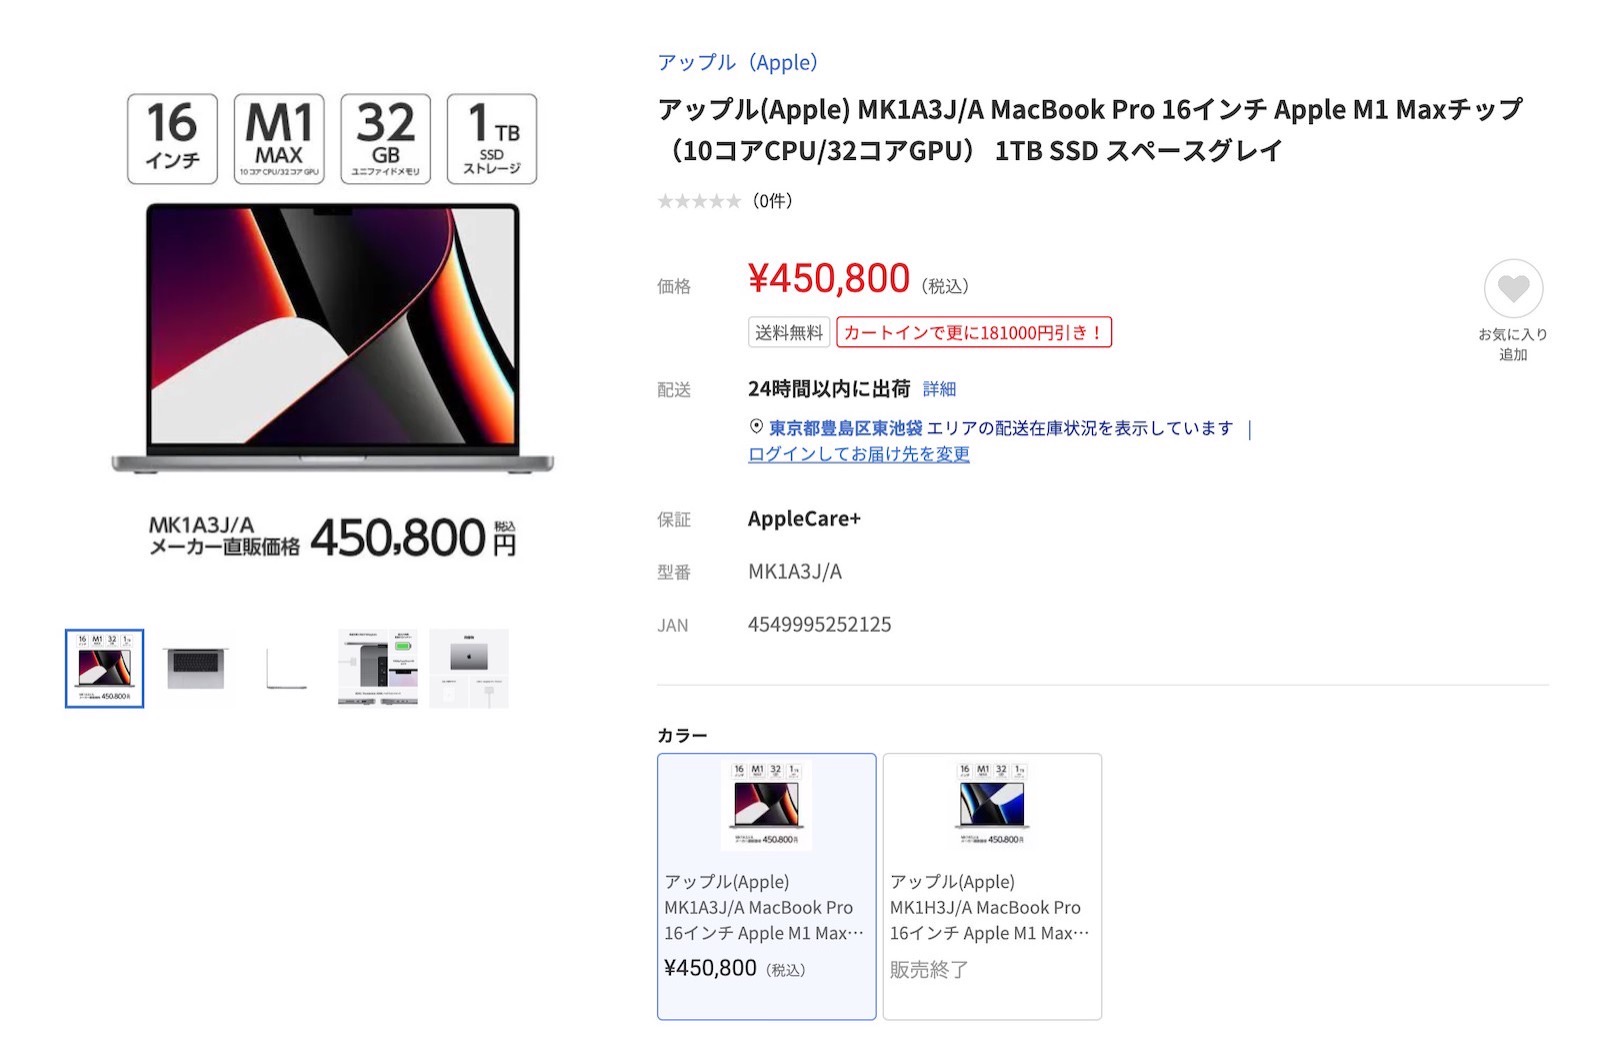 Yamada web m1 macbook sale